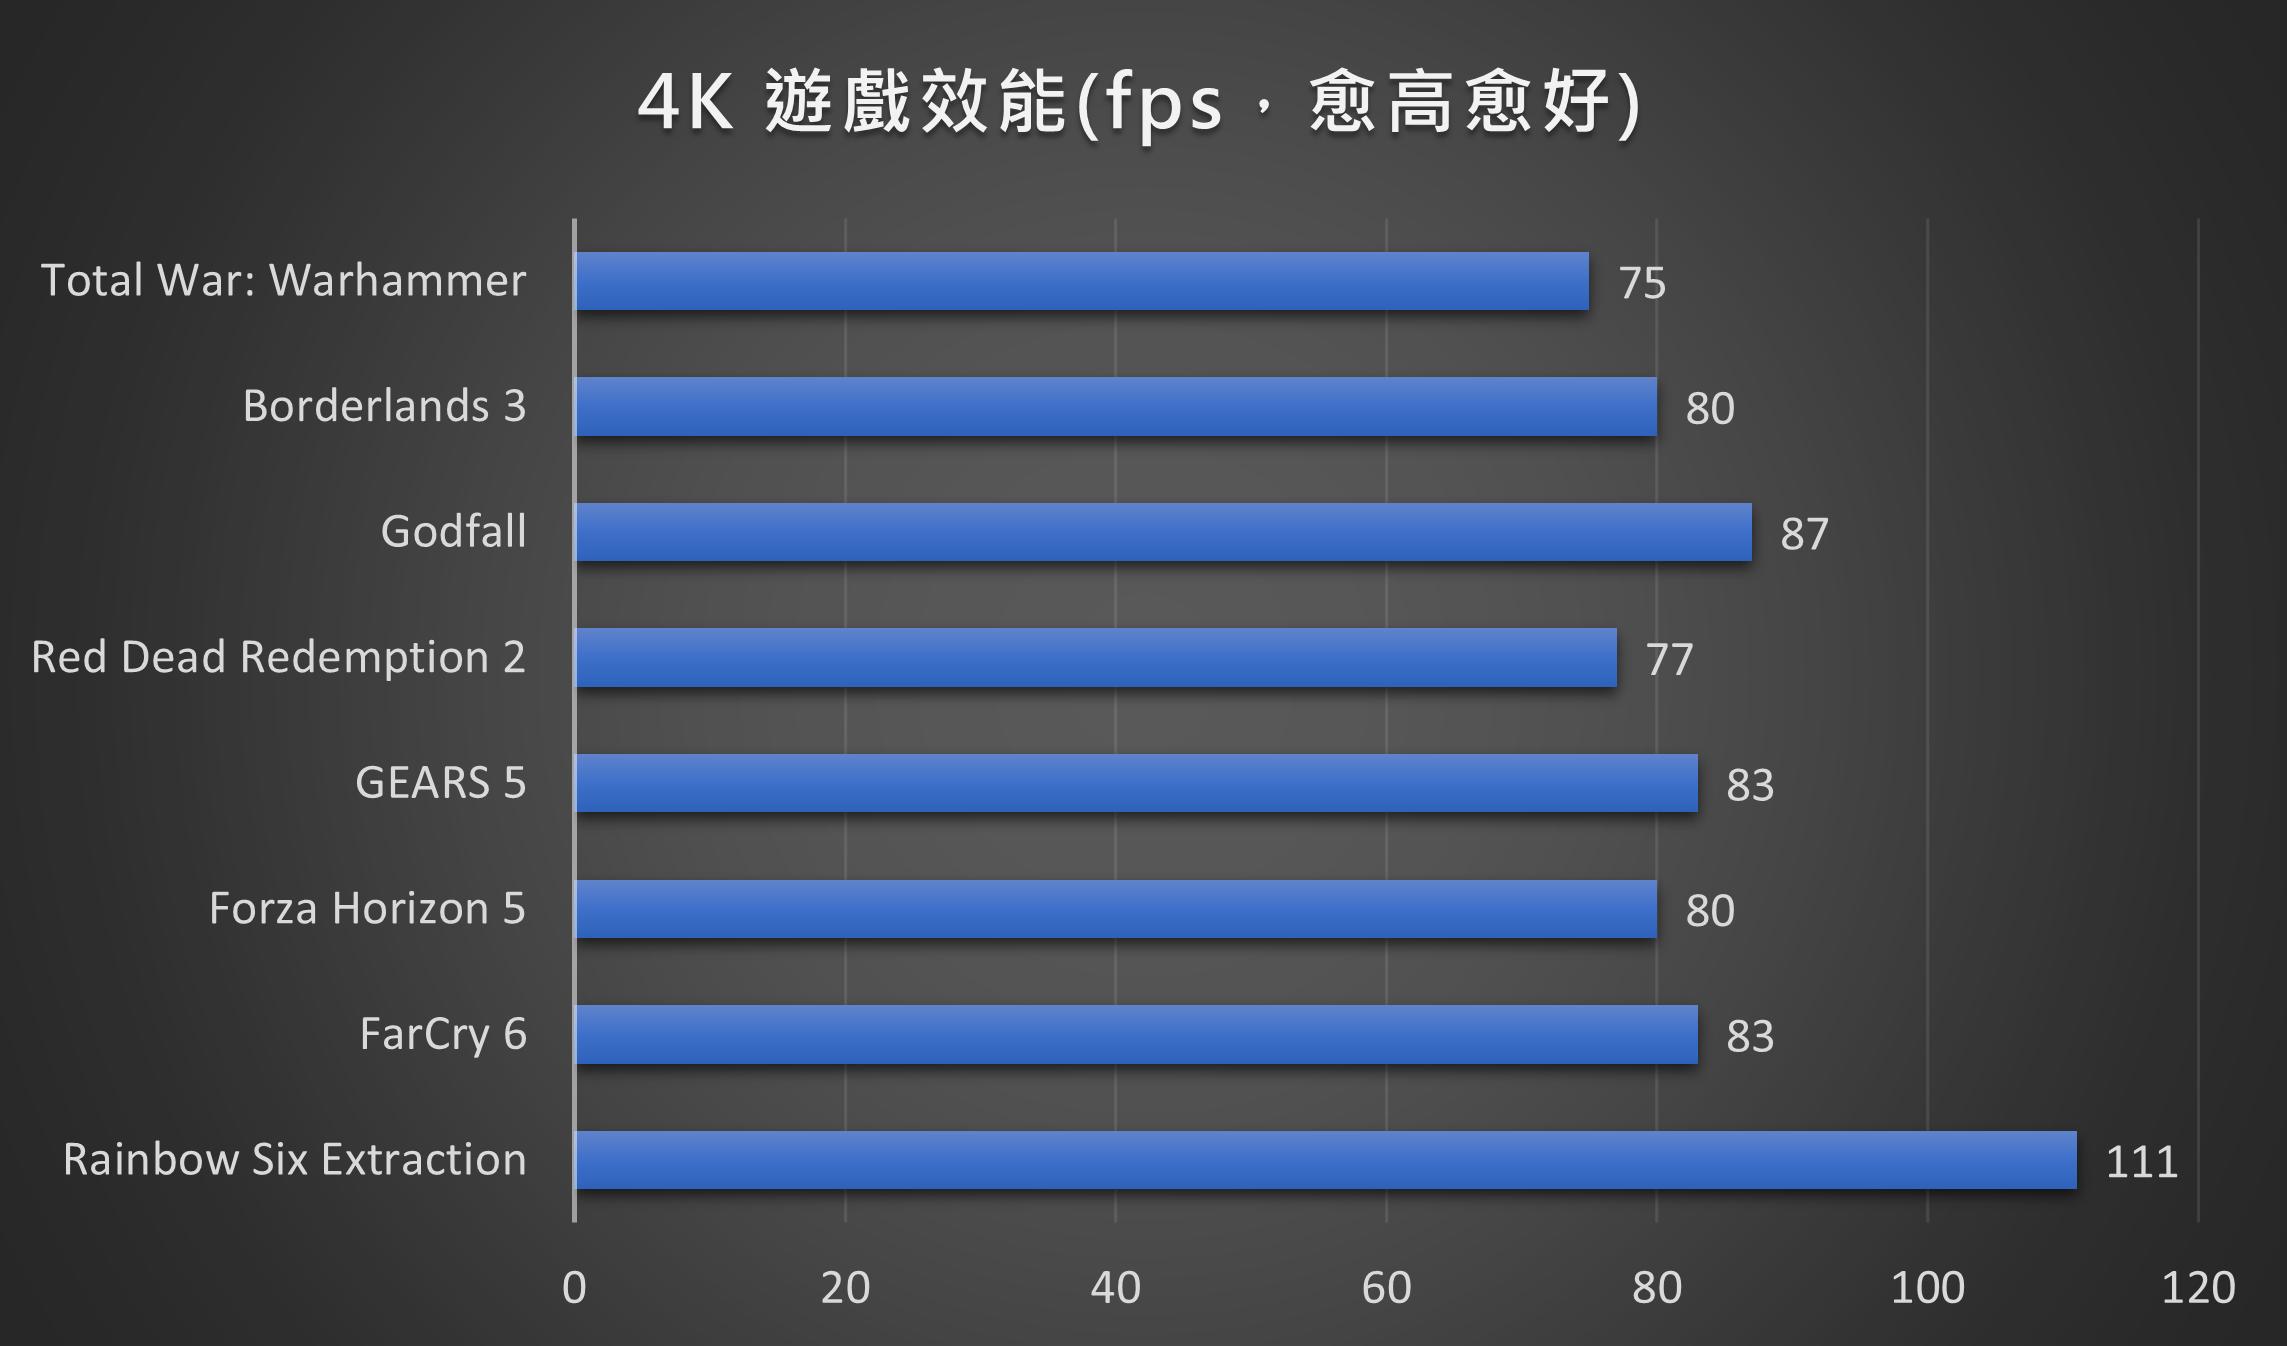 4K 效能部份，幾乎都有 75 張以上的成績。